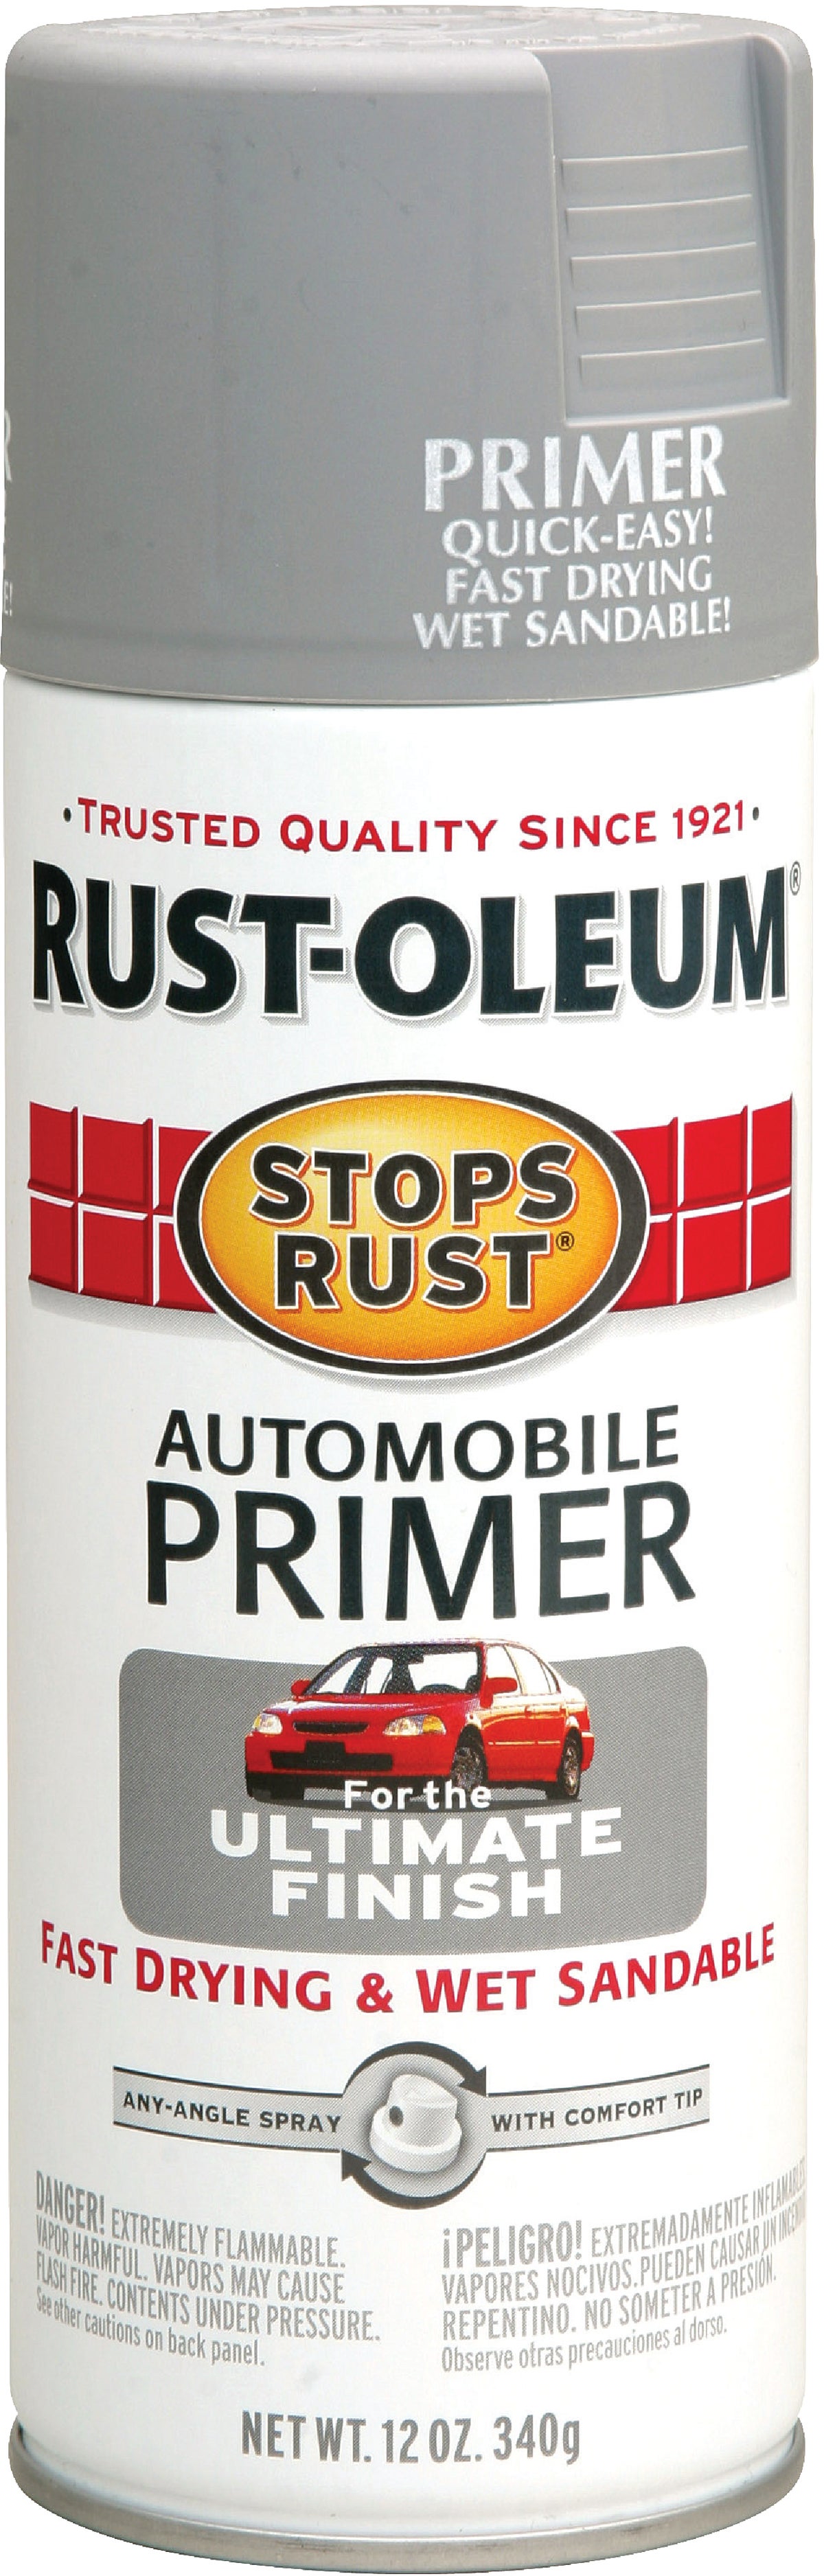 Rust-Oleum Gray Filler Primer Spray 11 oz. 249279